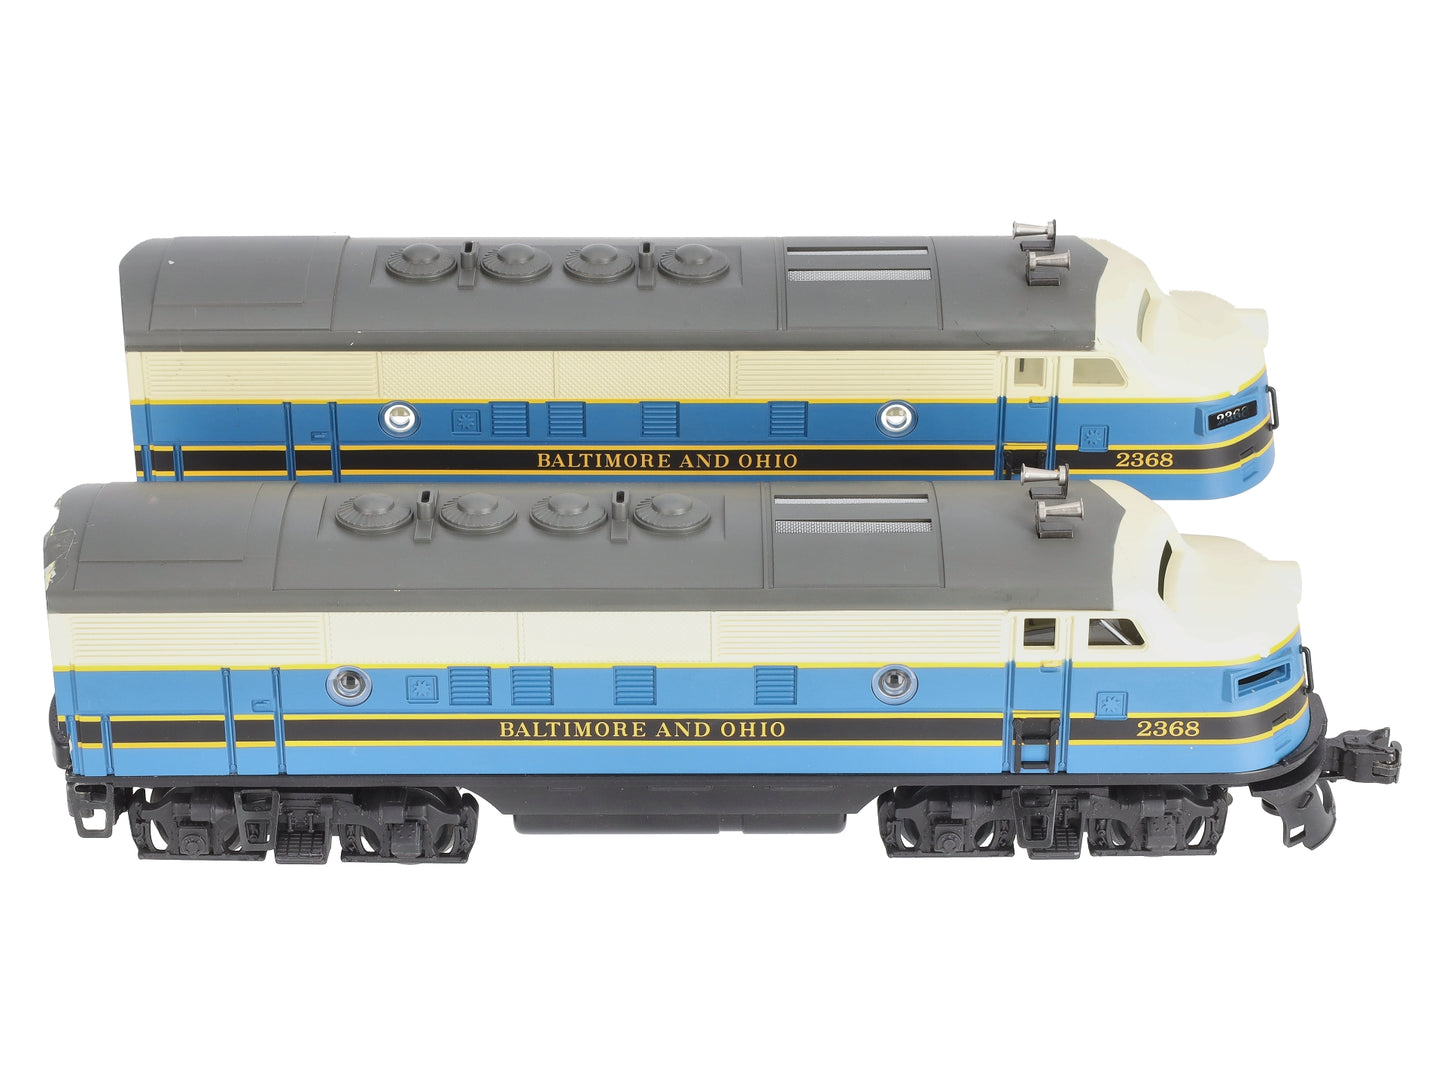 Williams 20190 O Gauge Baltimore & Ohio F-3 AA Diesel Locomotive Set/Box